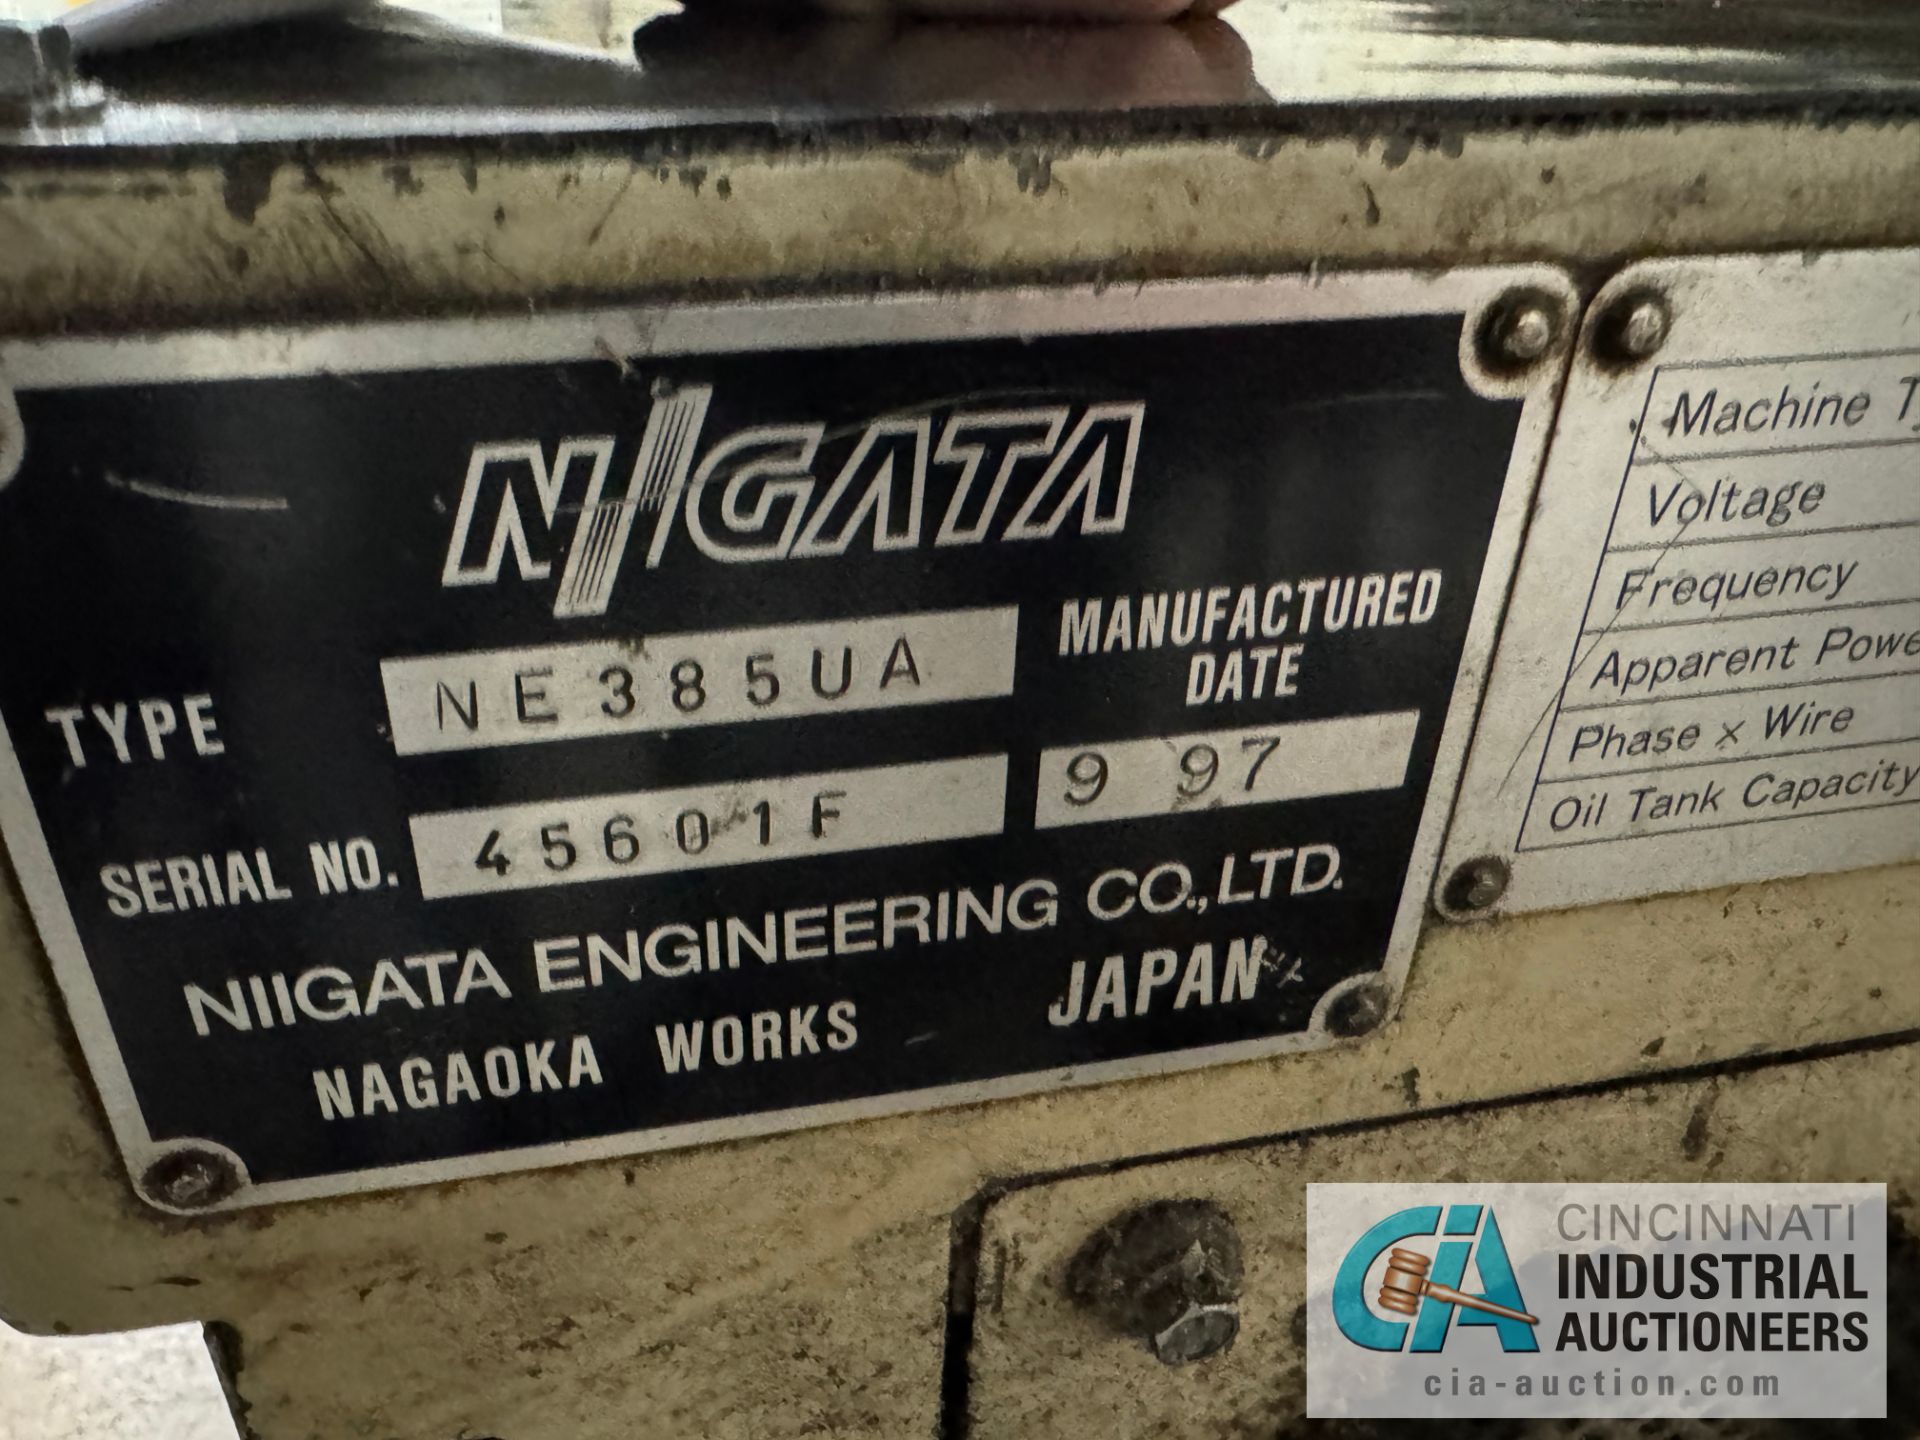 Niigata Model NE385UA4, 385-Ton x 38.63-oz, Injection Molding Machine (1997), s/n 45601F, Tie Bar - Image 10 of 10